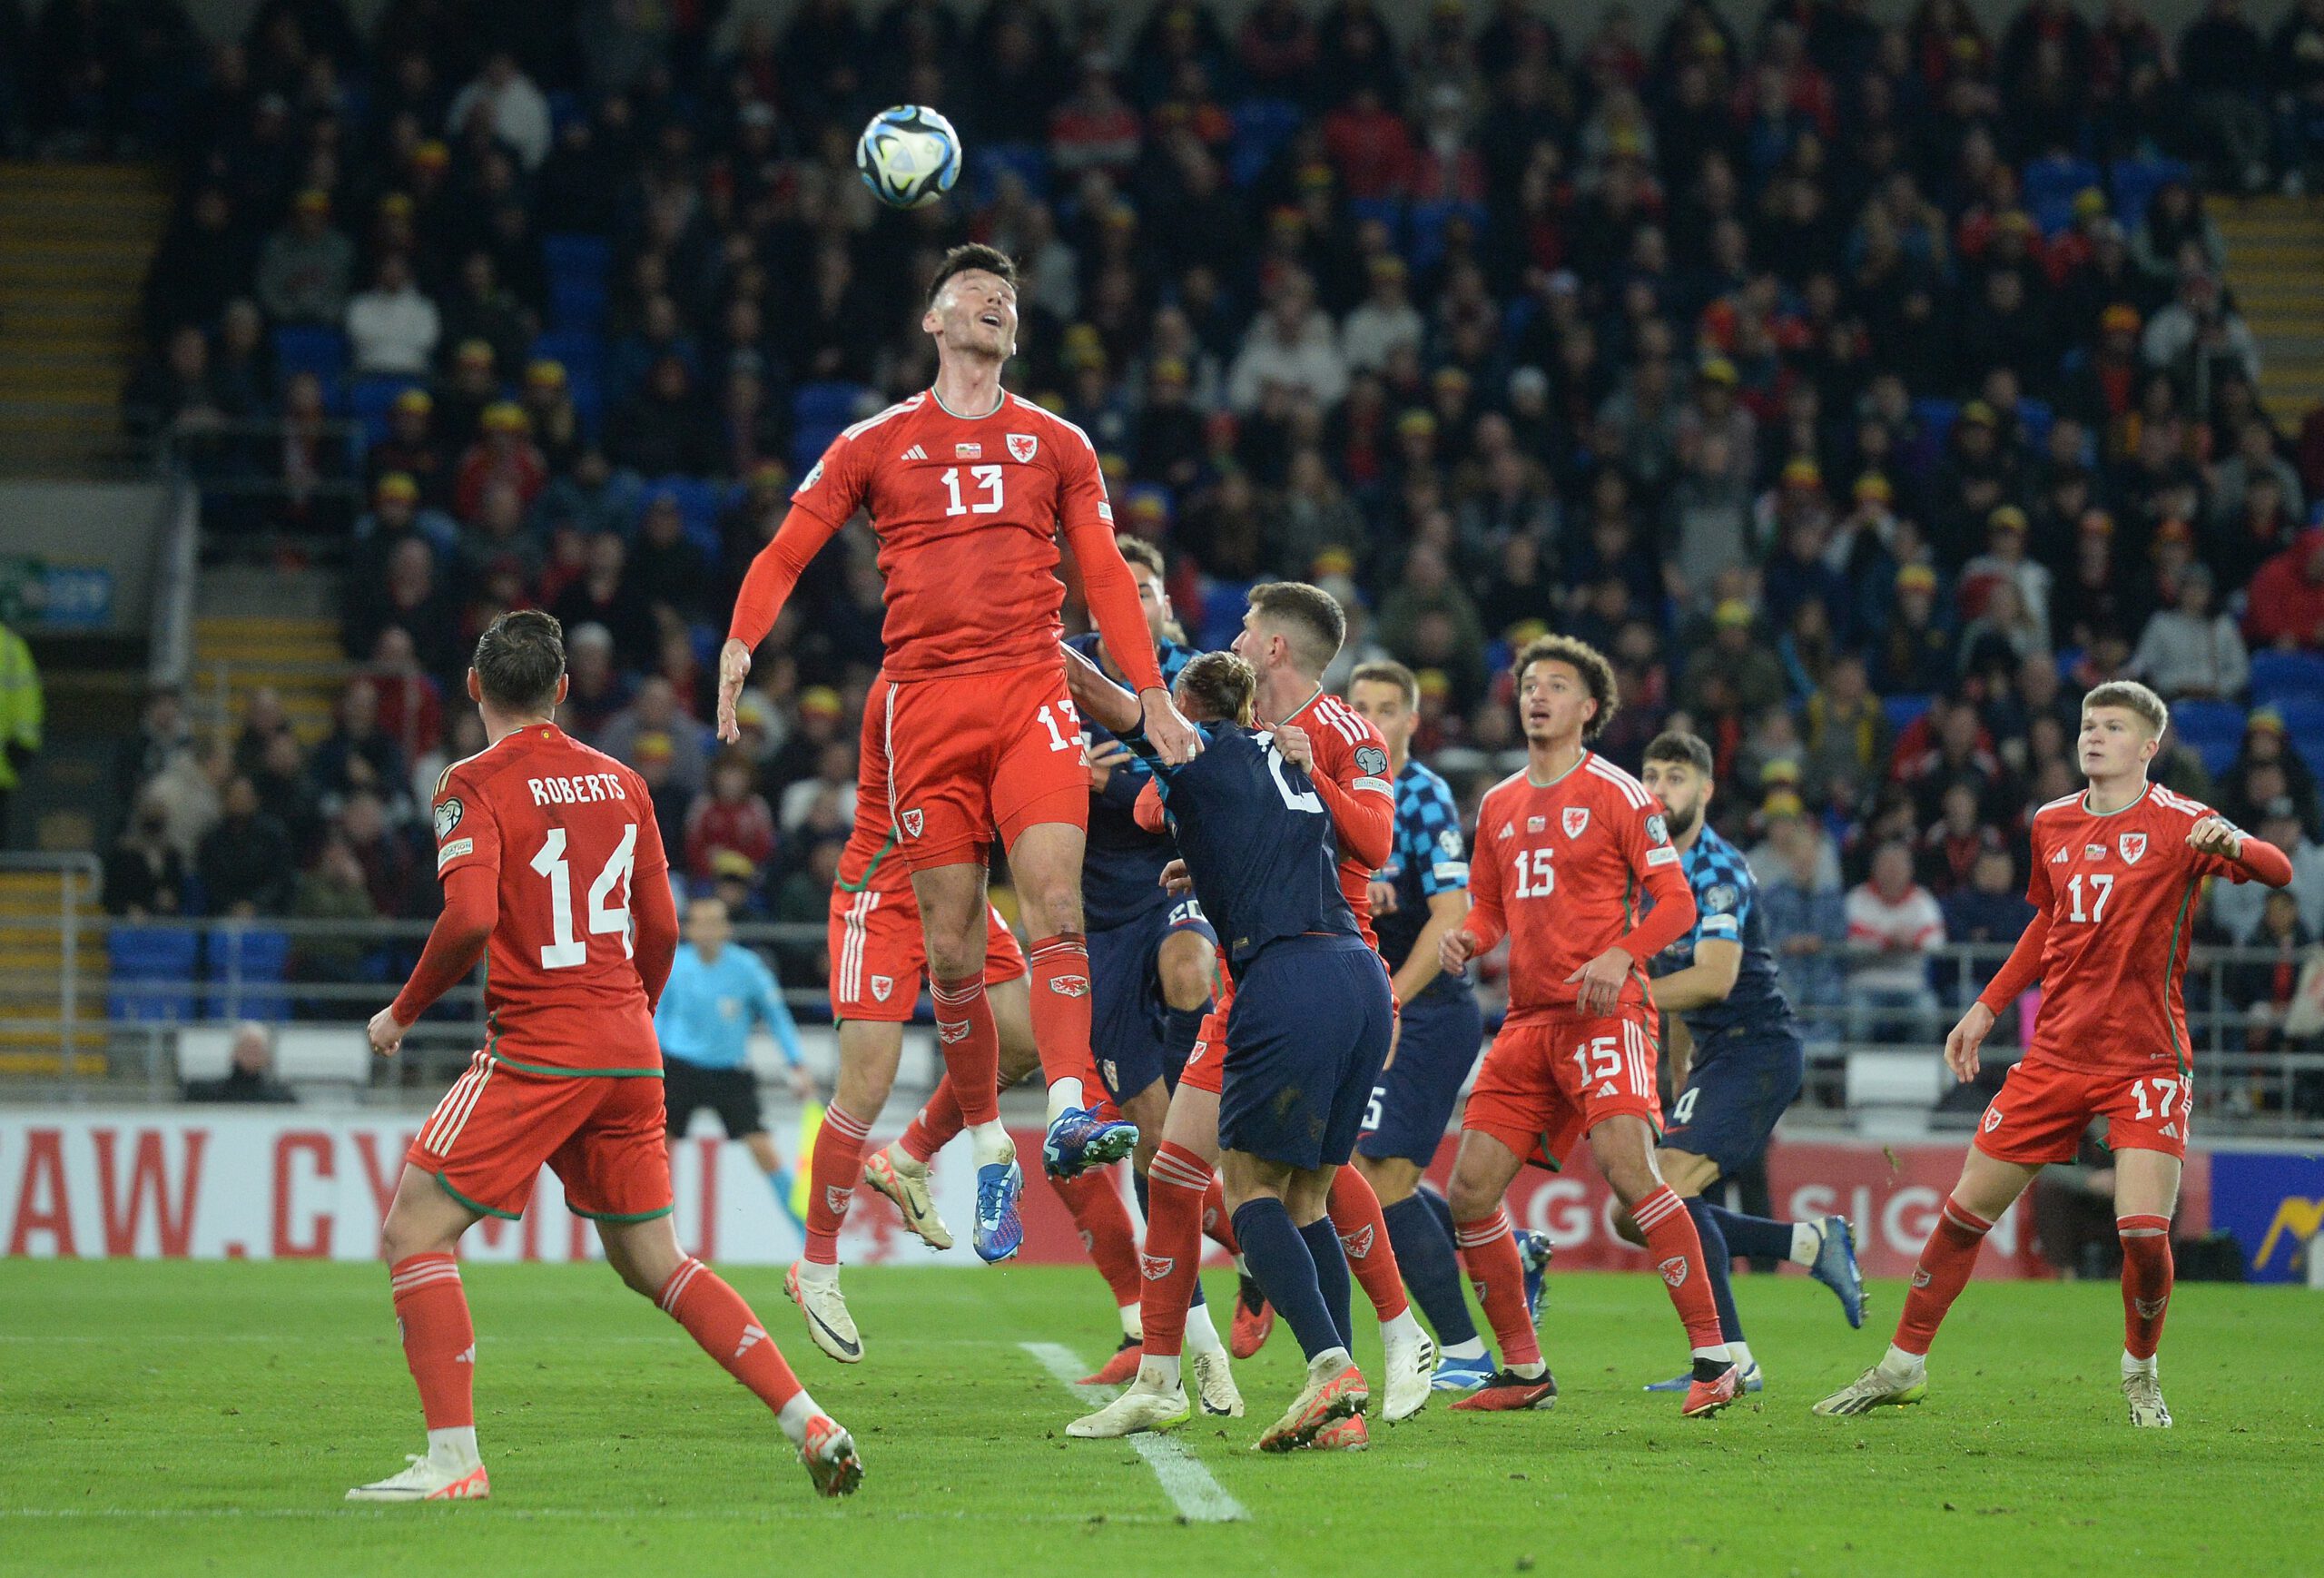 Wales' Kieffer Moore heads the ball clear